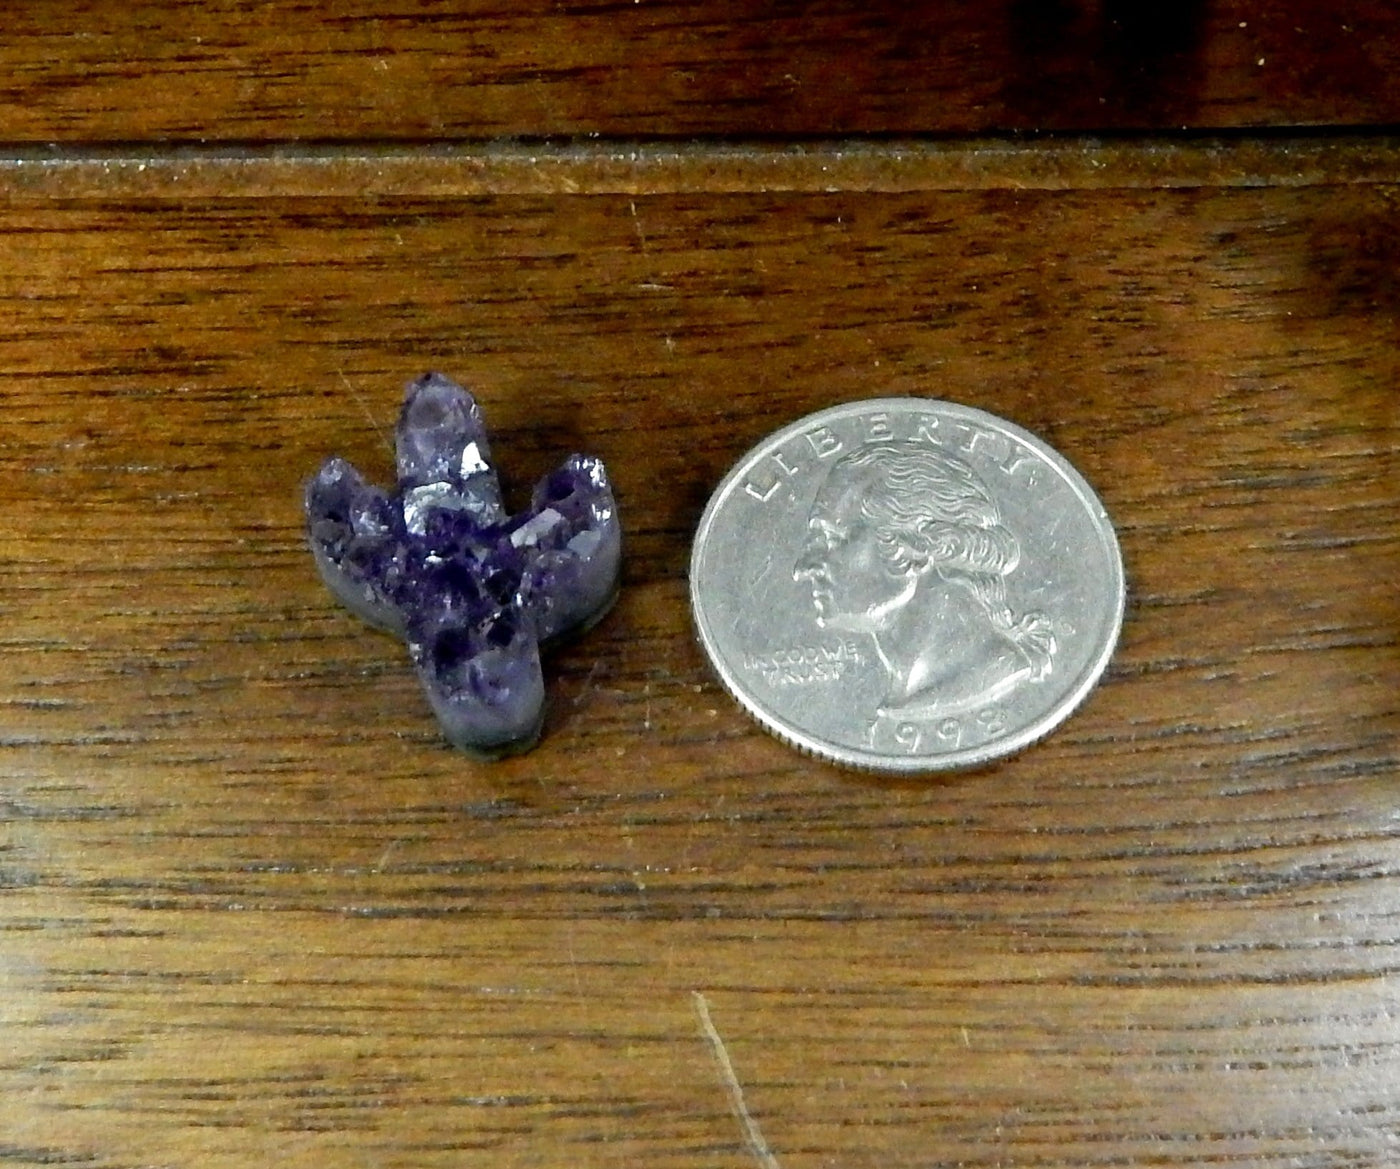 Single Petite Druzy Amethyst Cactus Cabochon top center drilled bead next to quarter for size comparison